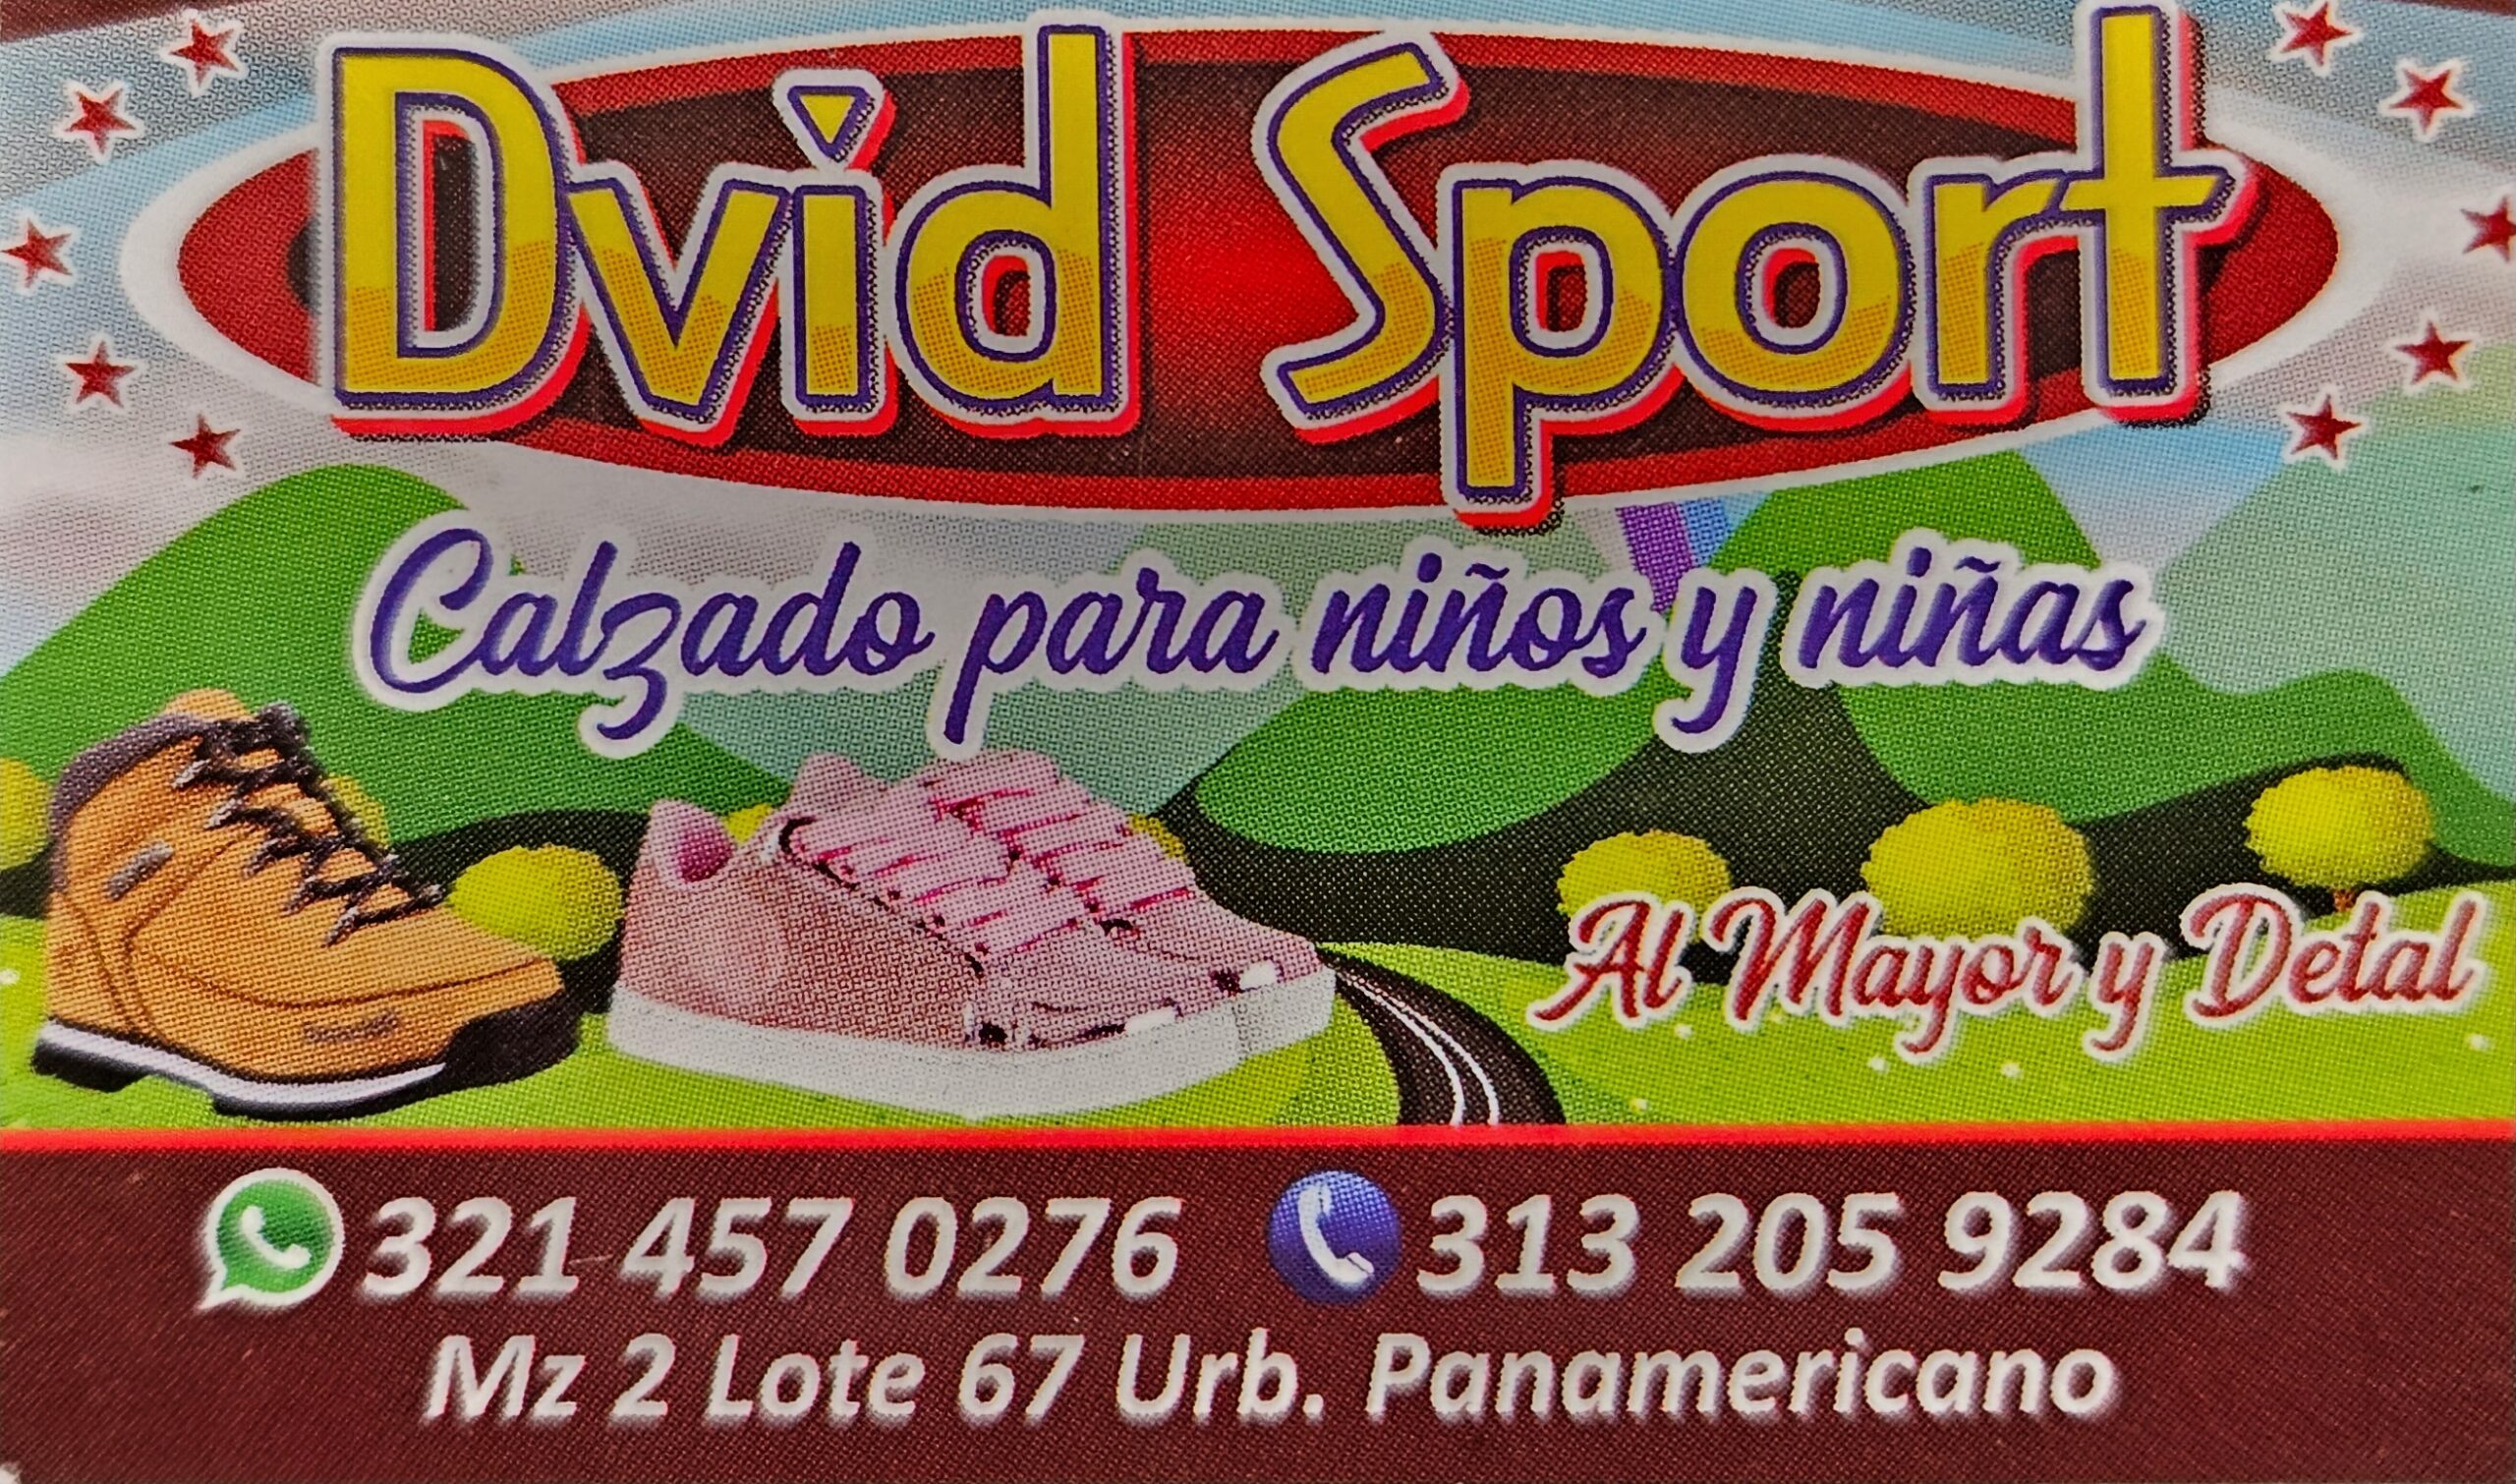 Calzado Dvid Sport